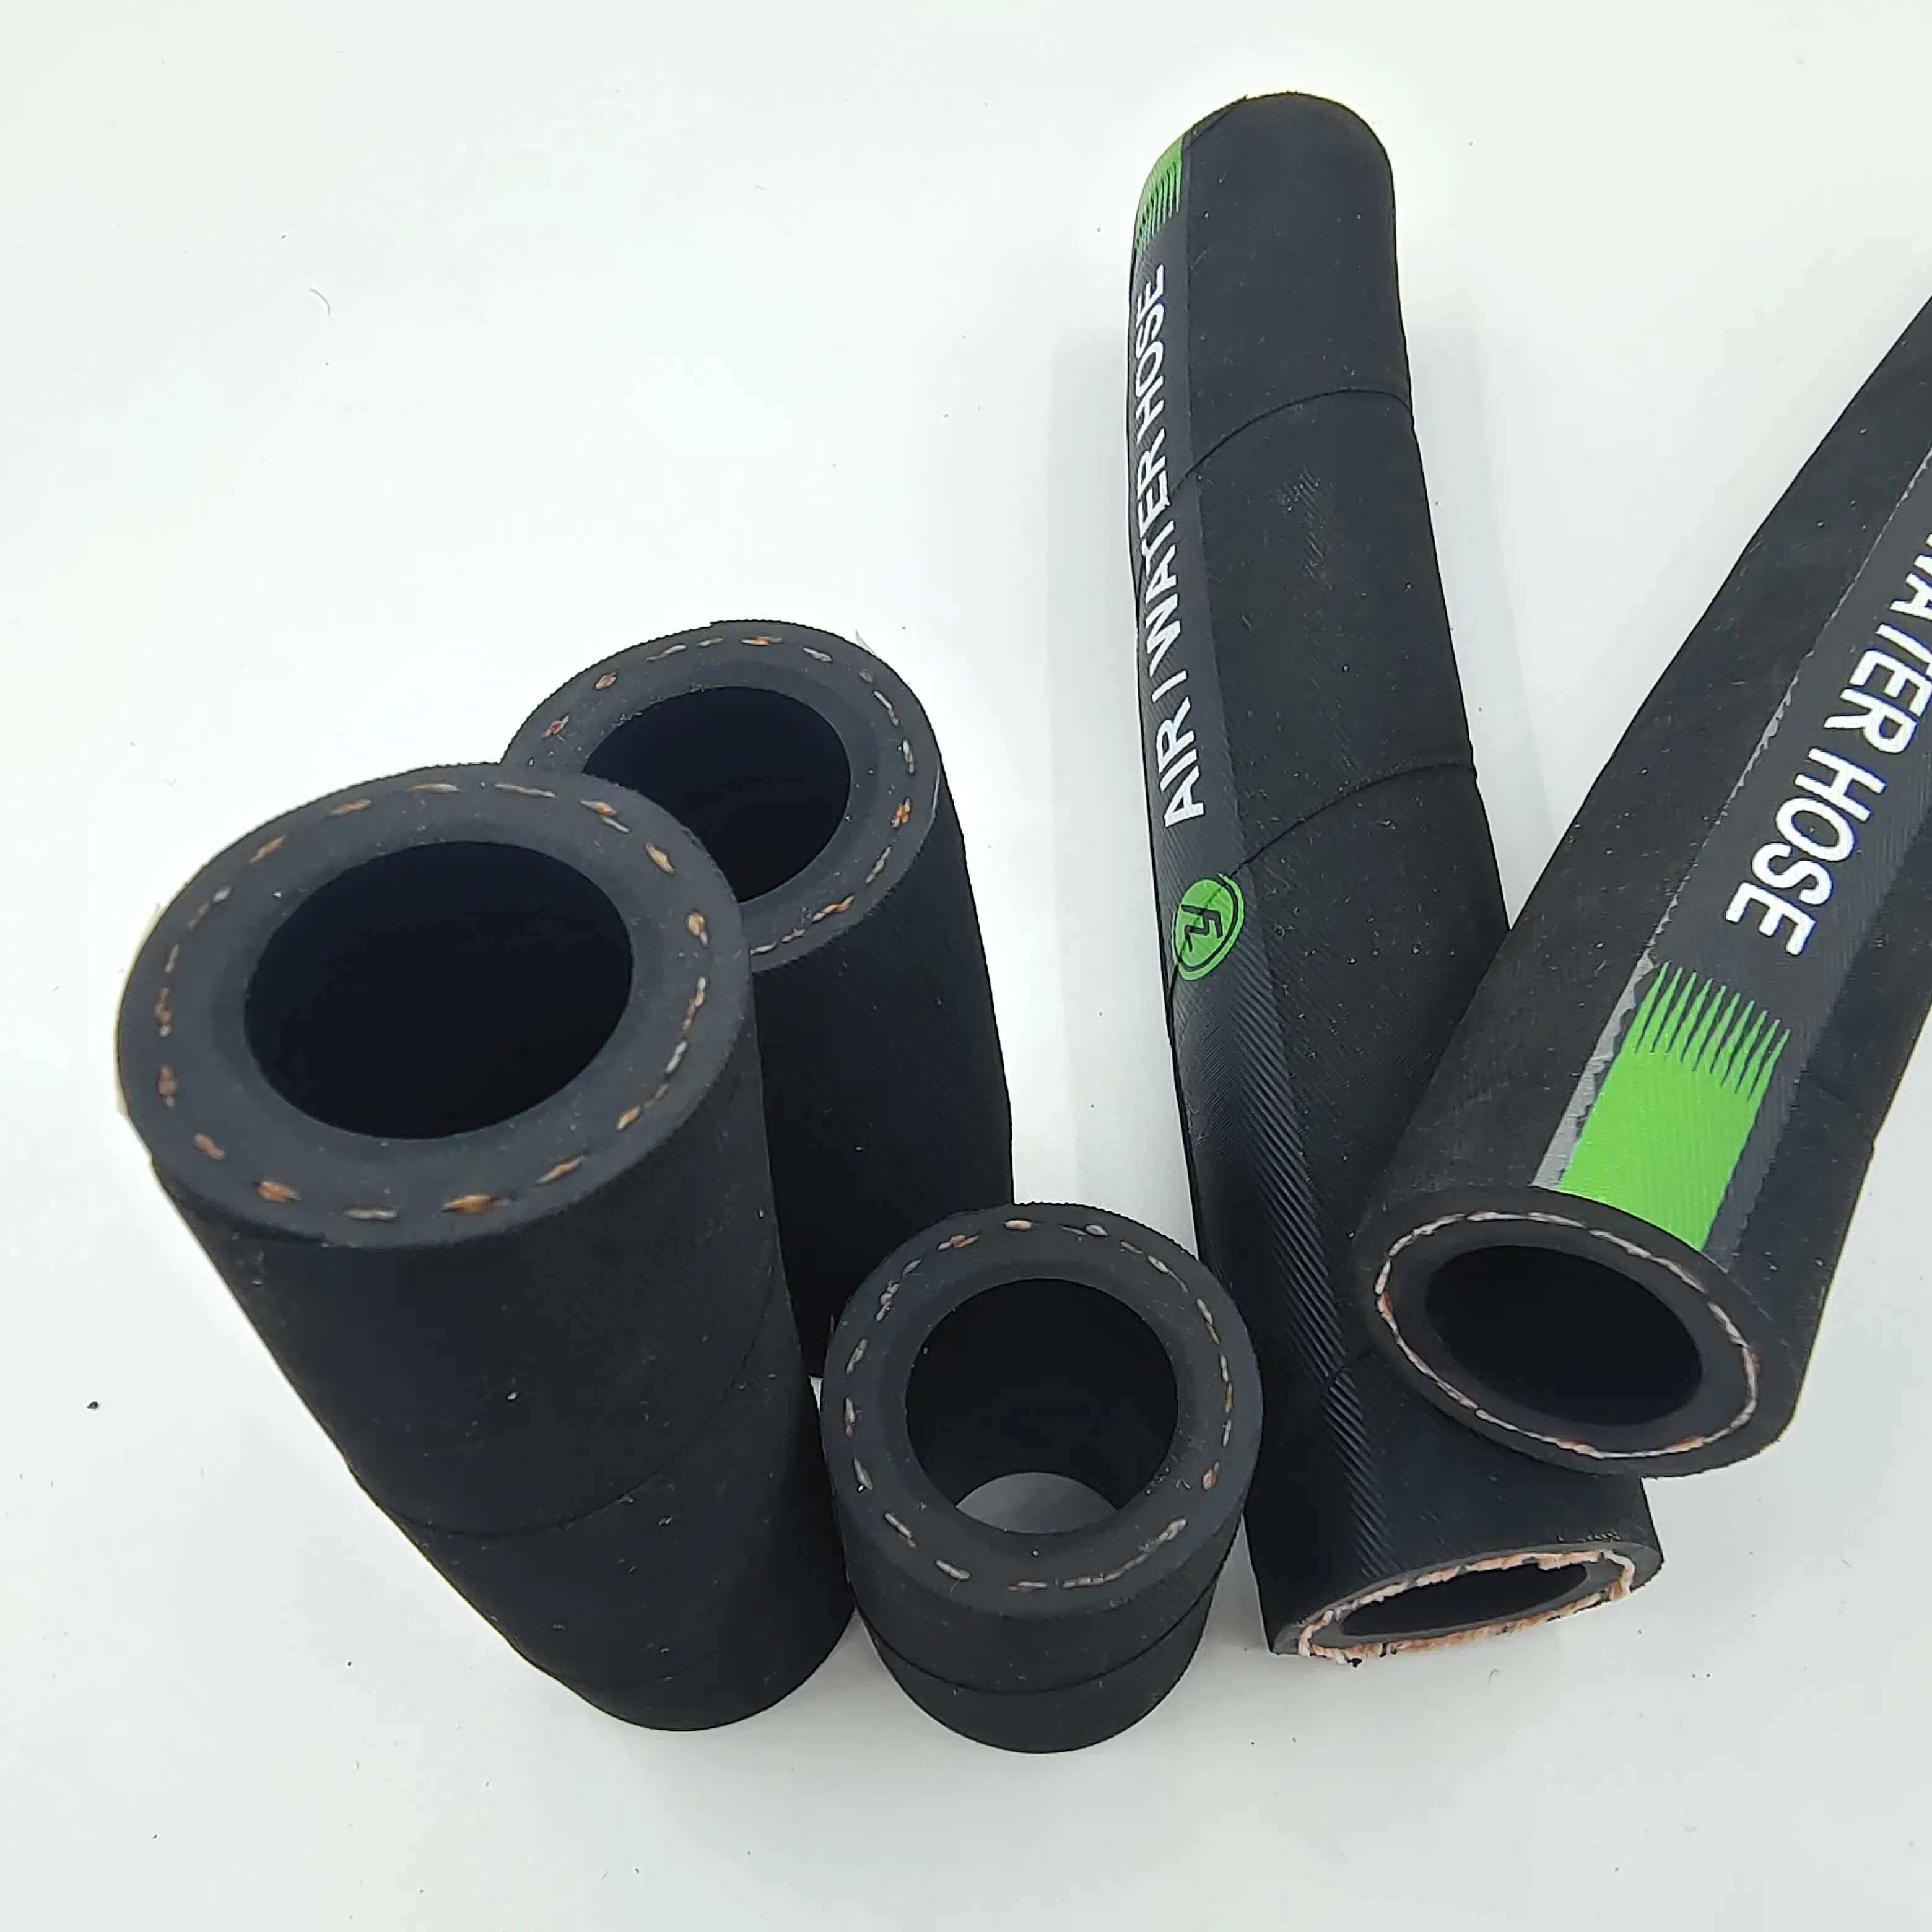 Sandblasting pipe wear-resistant anti-aging shipyard sandblasting rubber pipe